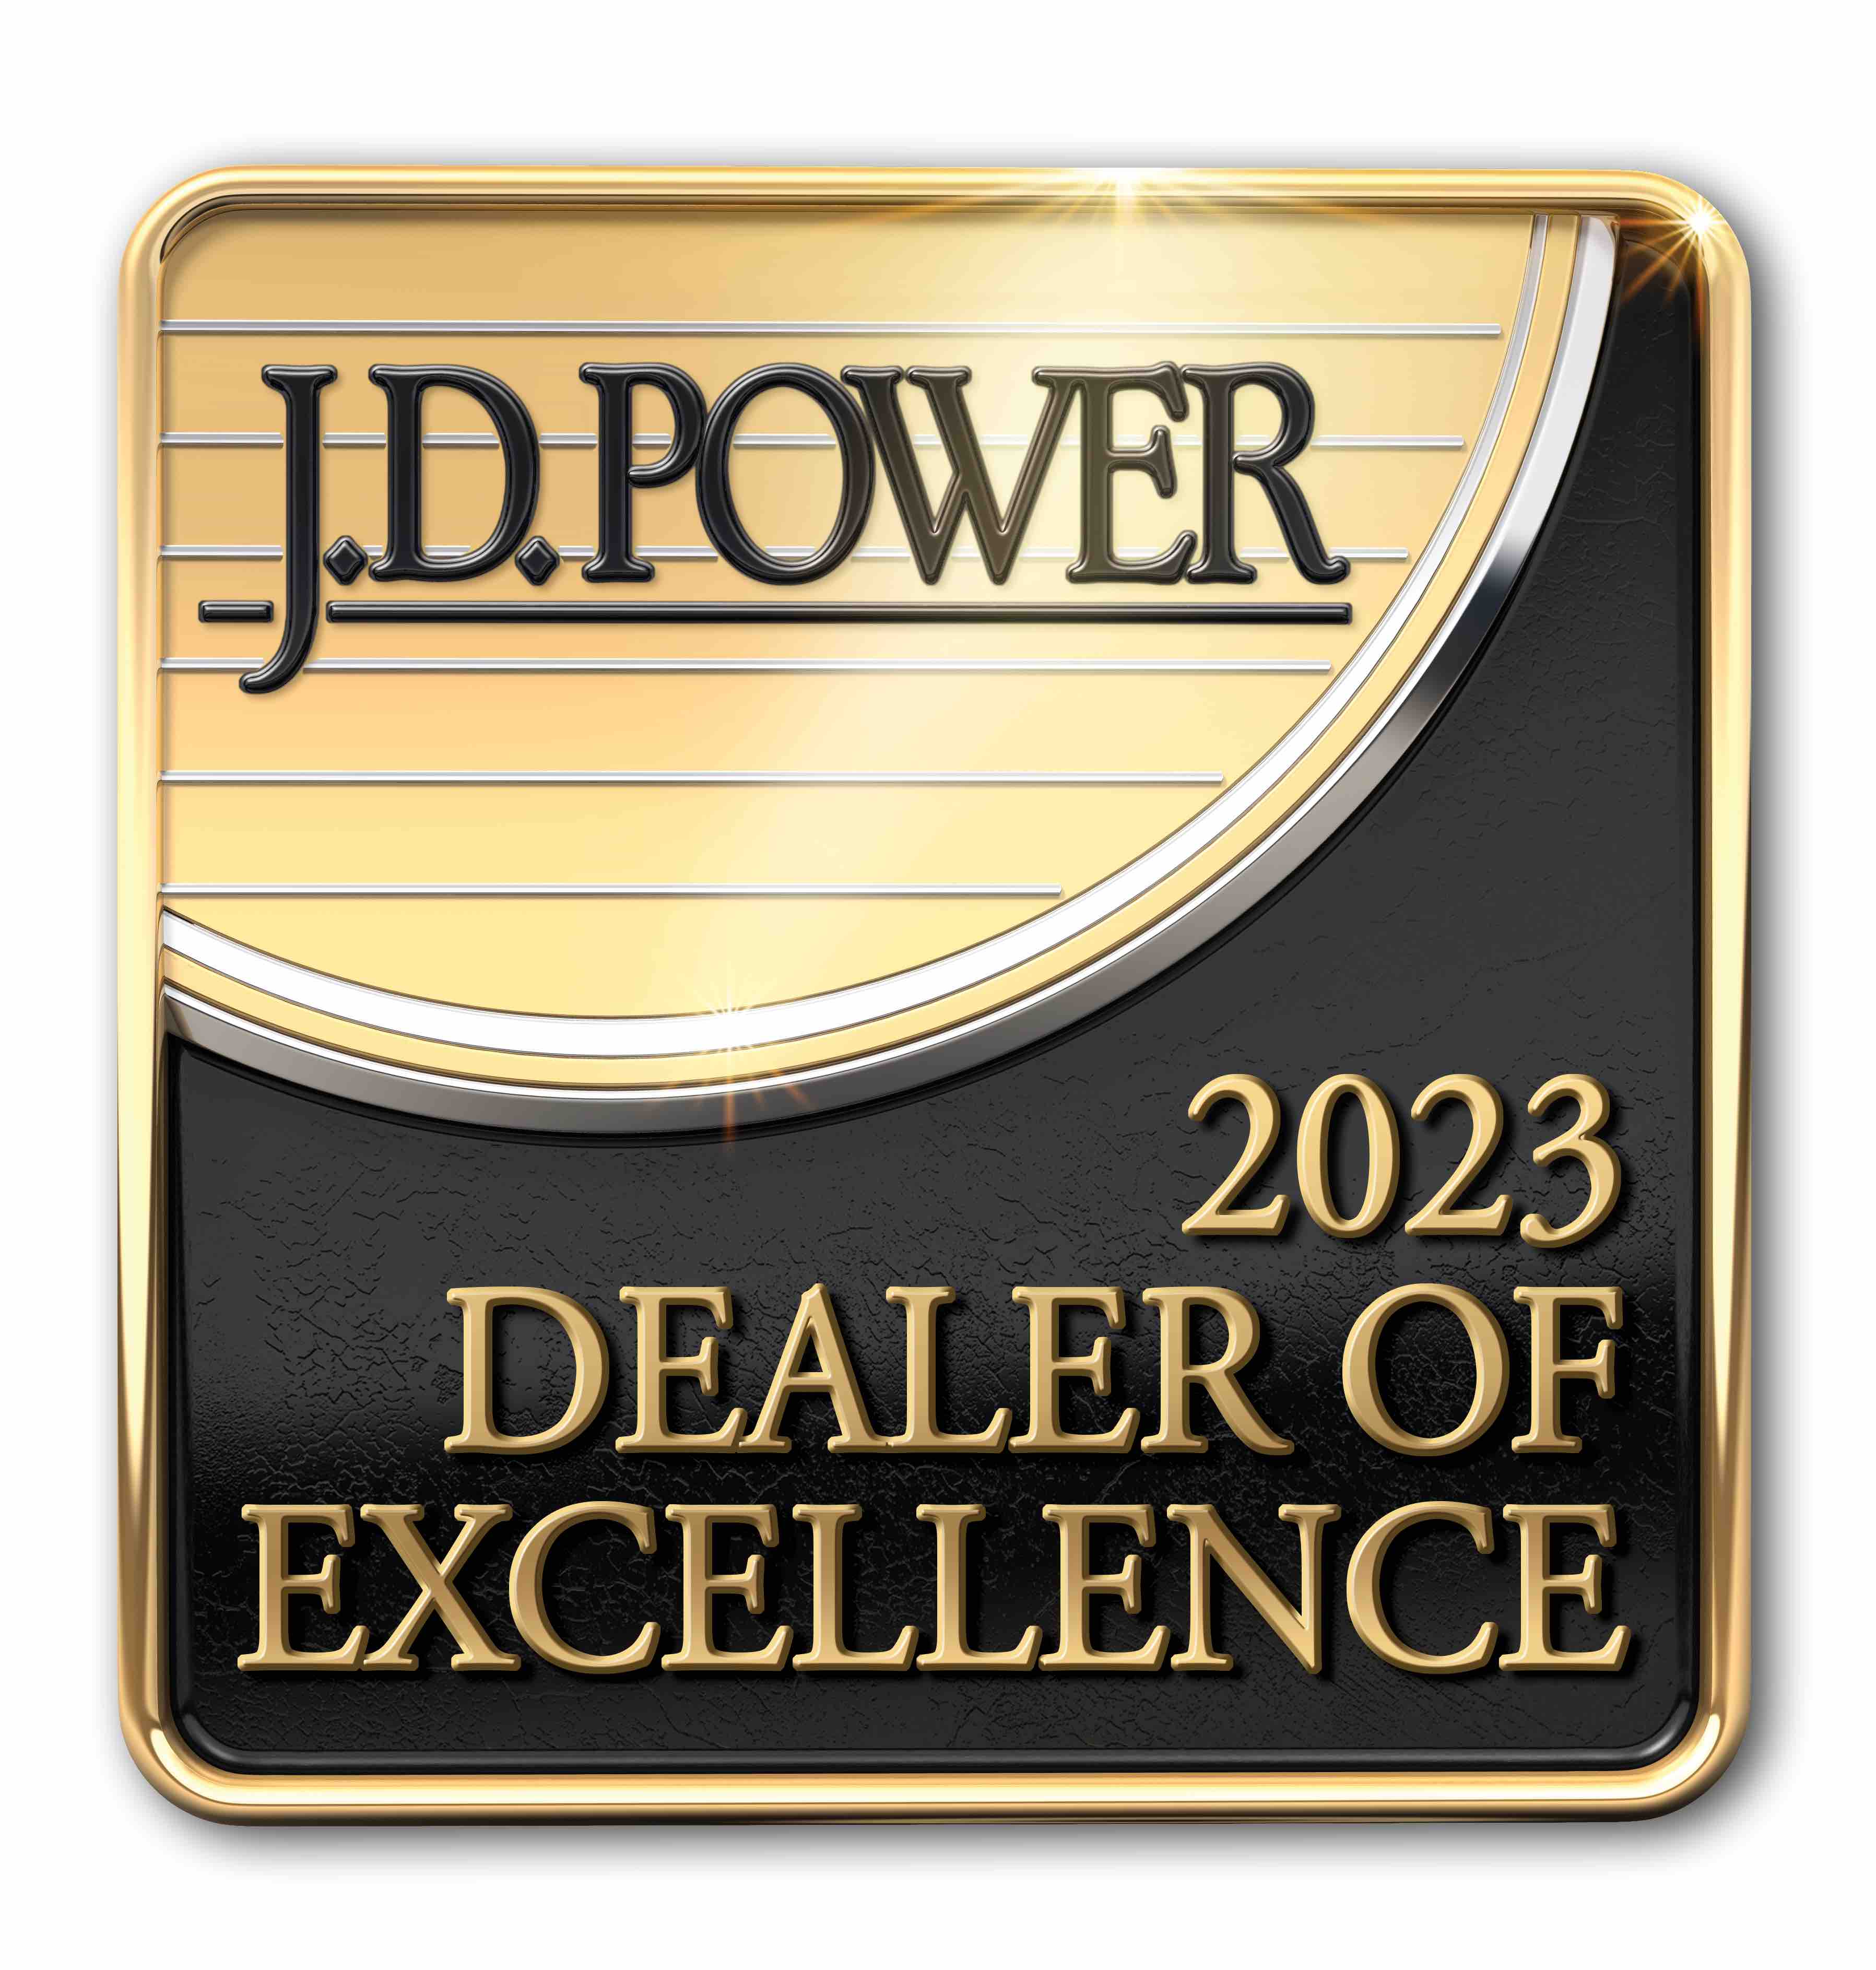 2023 JD Power Dealer of Excellence Award